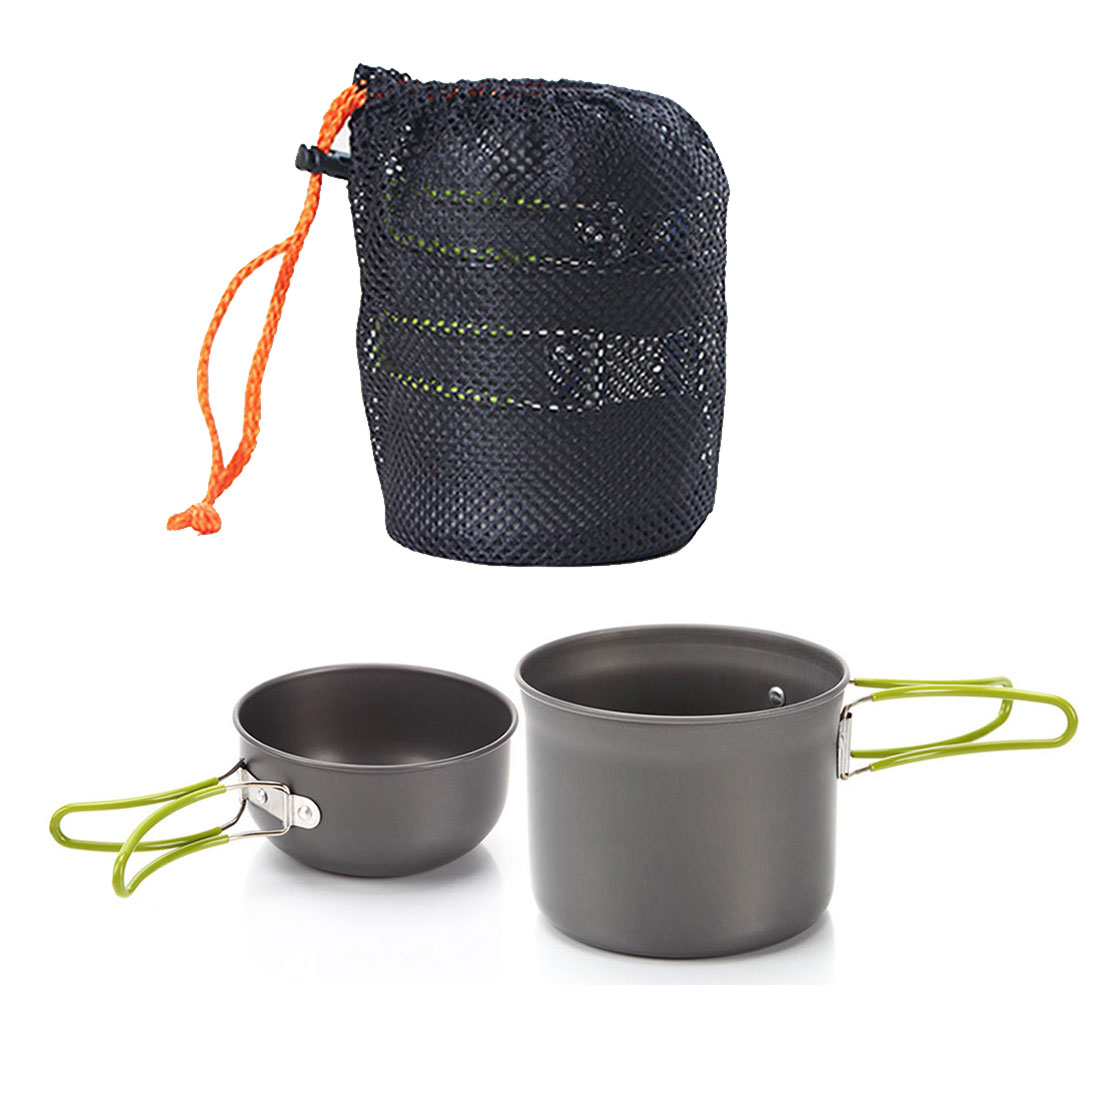 NEW Non-stick Pots Pans Bowls Portable Outdoor Camping Hiking Cooking Set Cookware Good Quality kamp malzemeleri